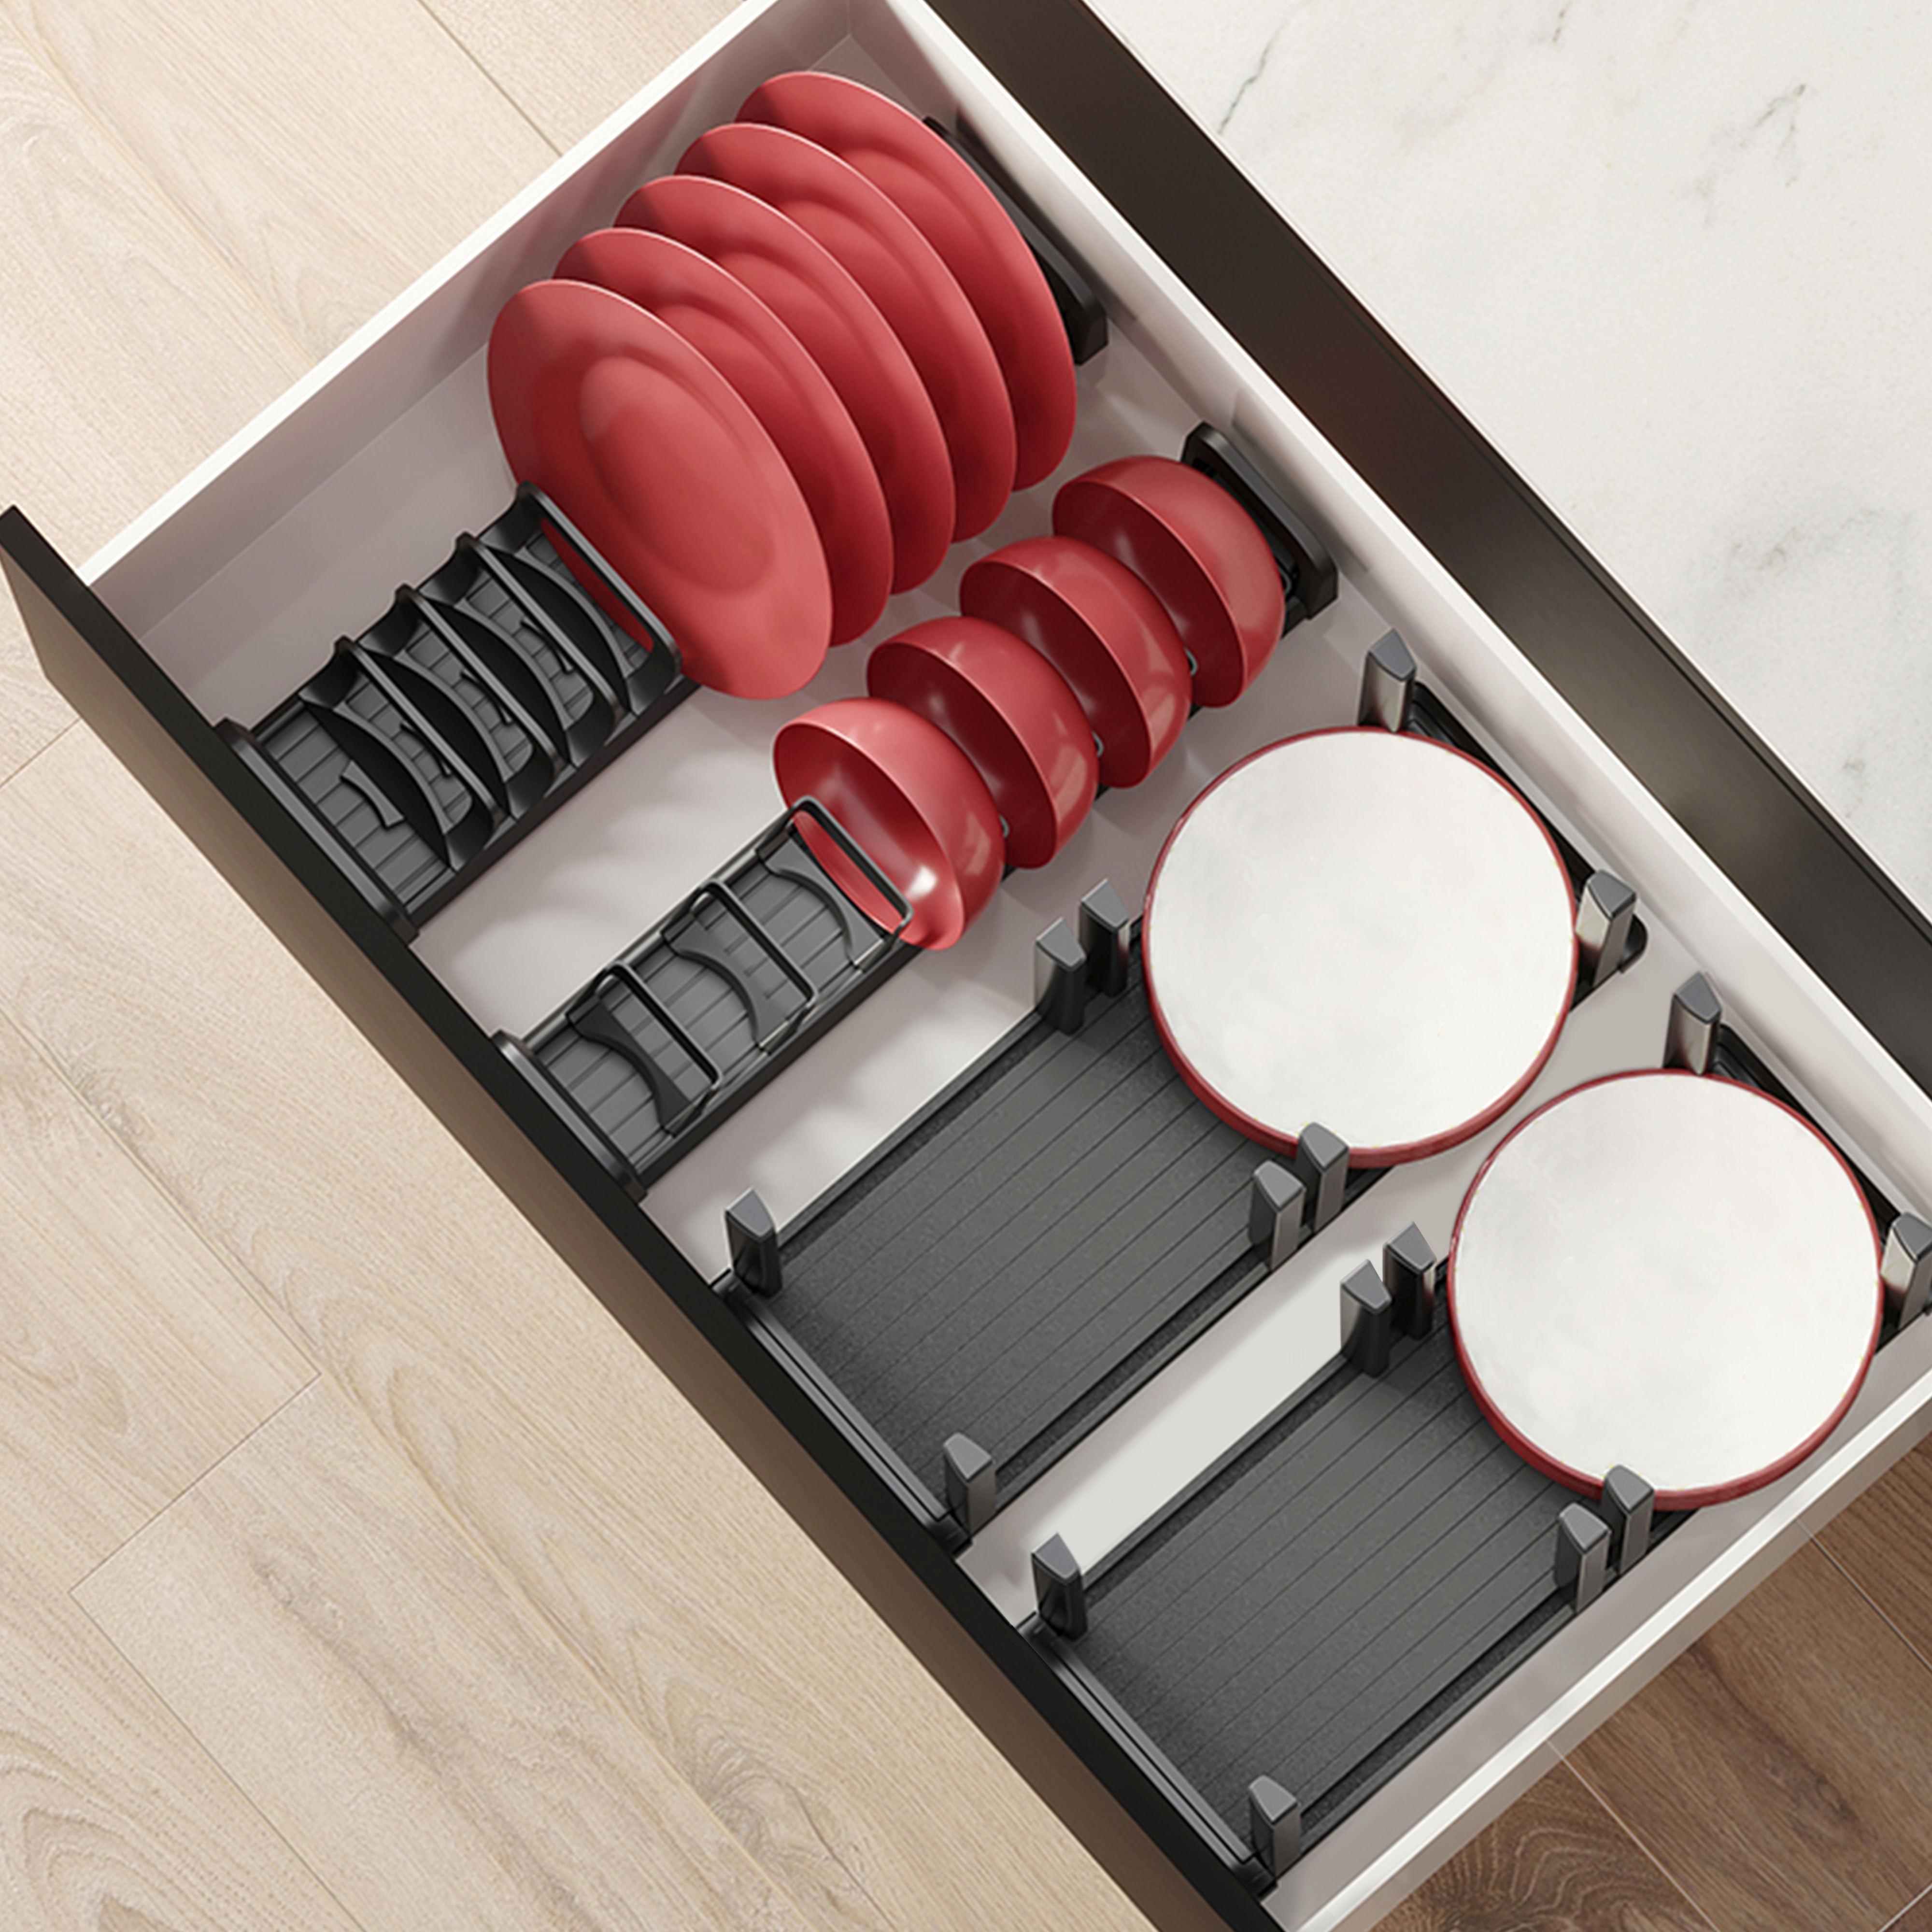  Porte-assiettes Orderbox pour tiroir, 90x470 mm, Gris anthracite, Aluminium et Plastique